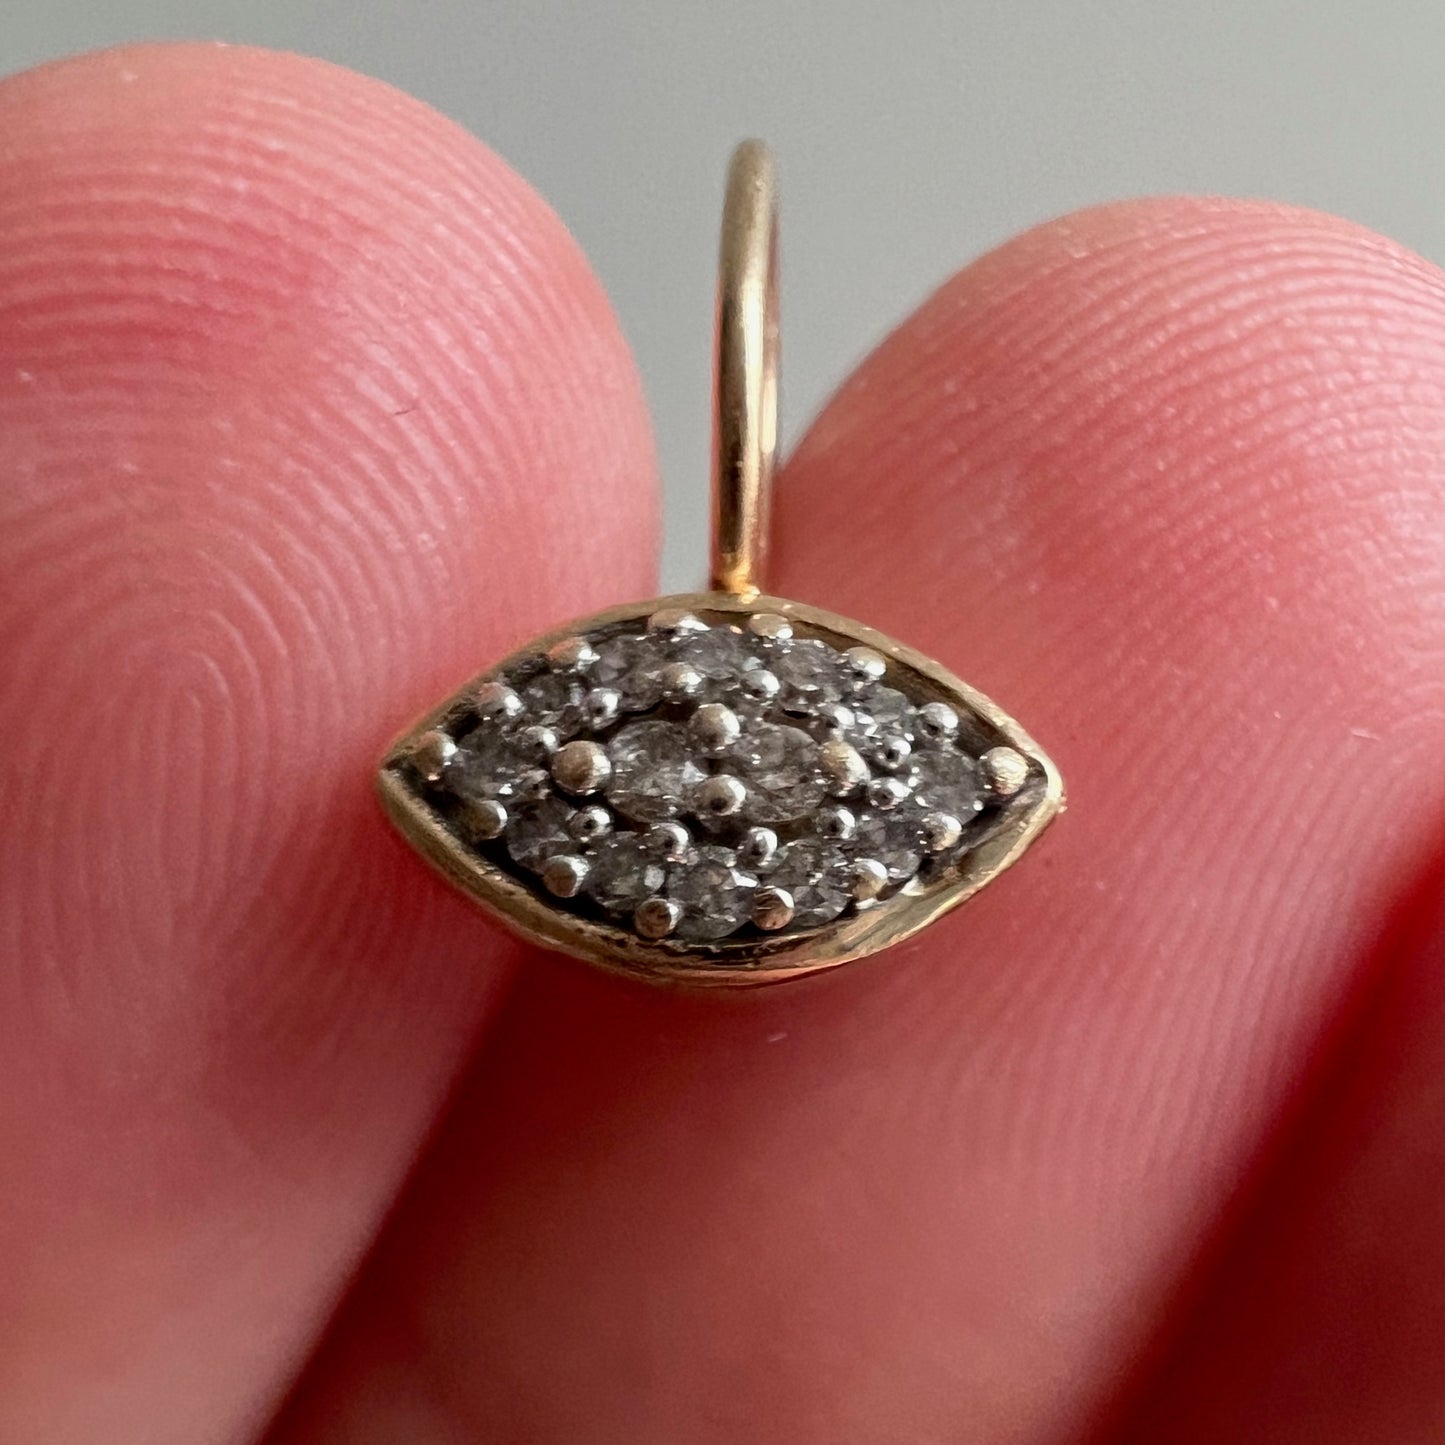 reimagined V I N T A G E // sparkle in my eye / 10k and diamond eye with 14k bail / a tiny pendant